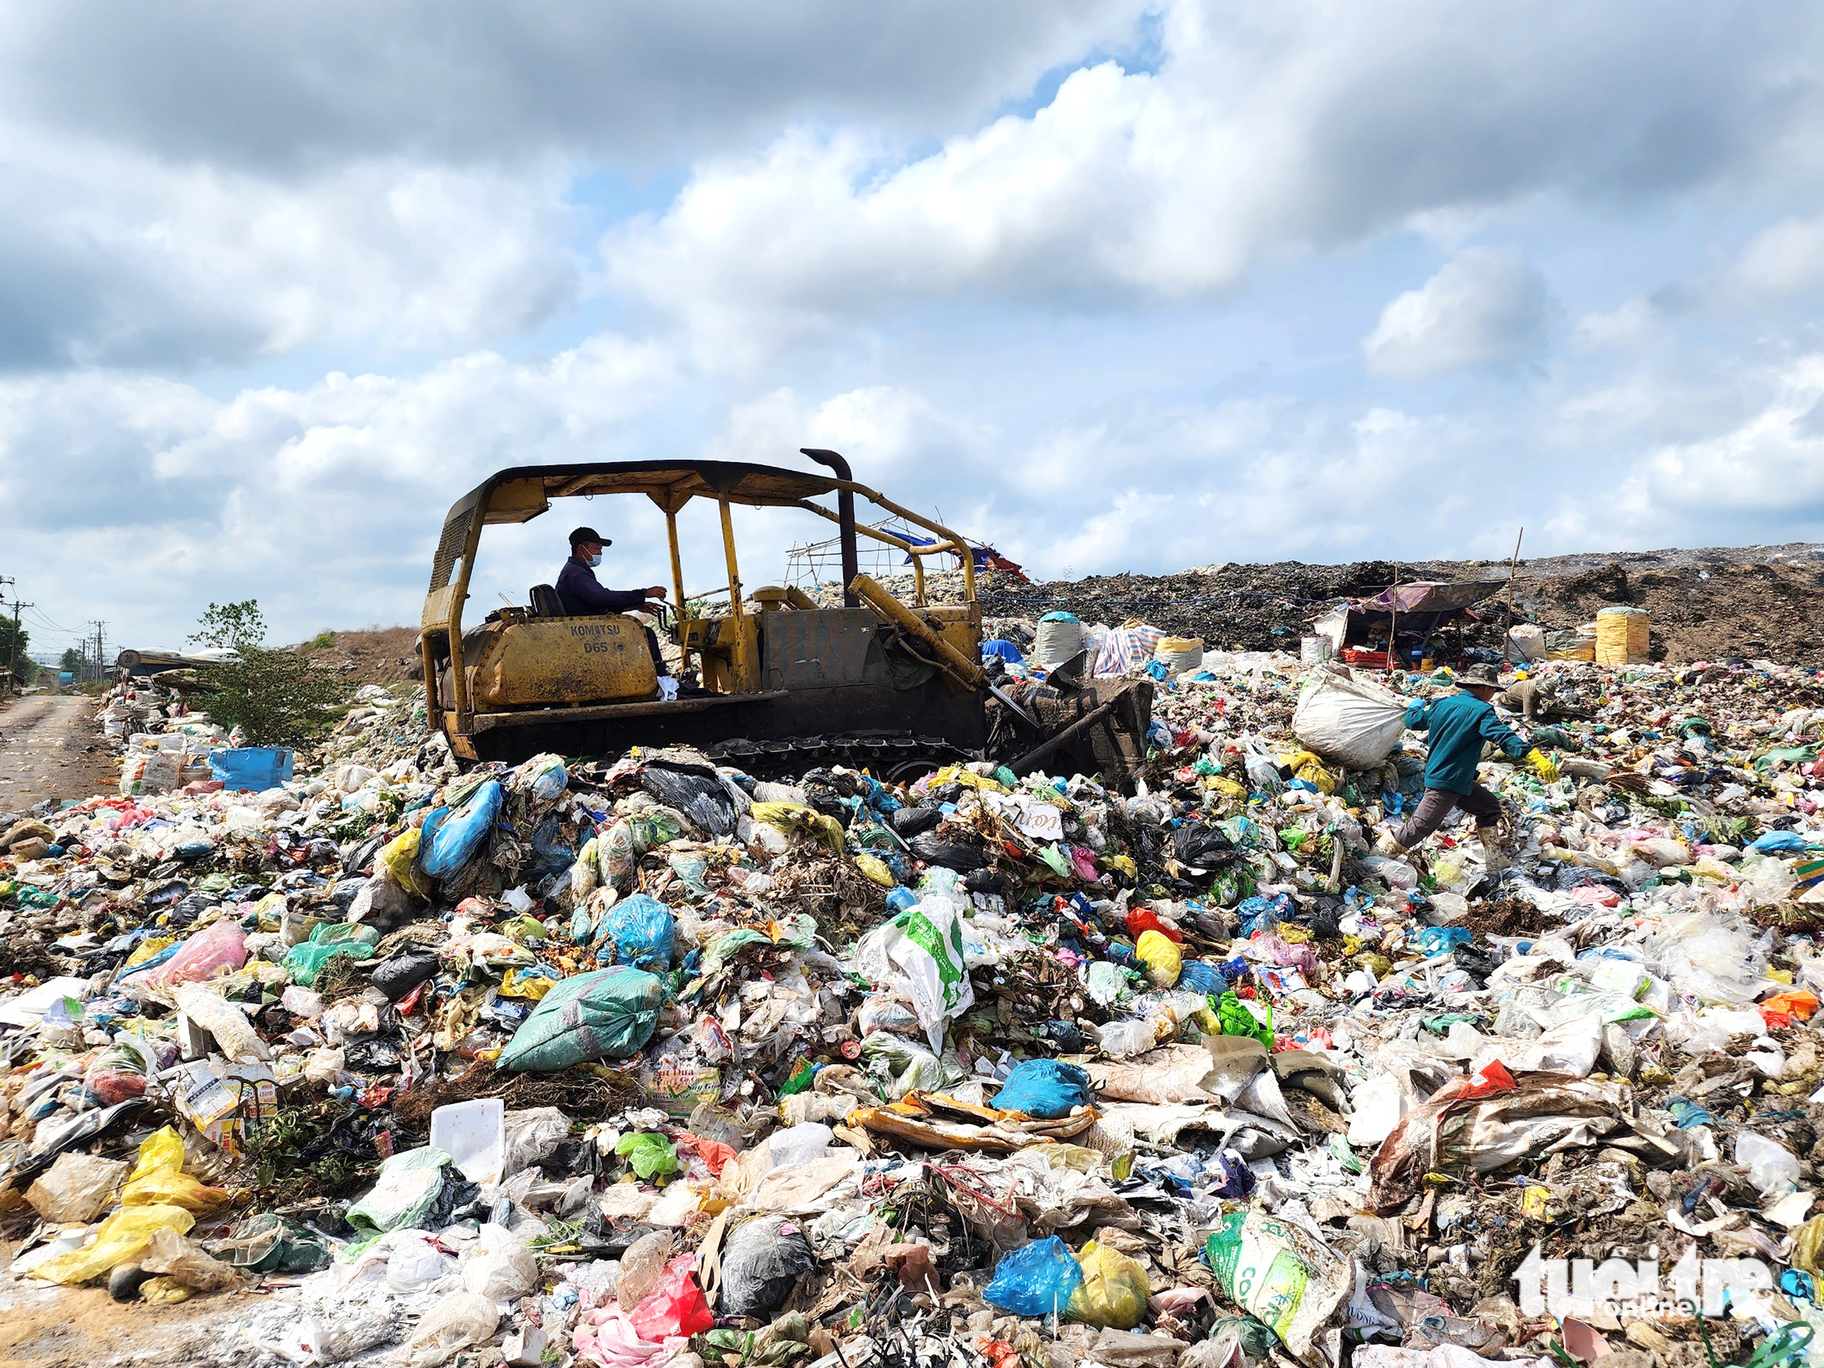 Provinces in Vietnam's Mekong Delta struggle with waste management